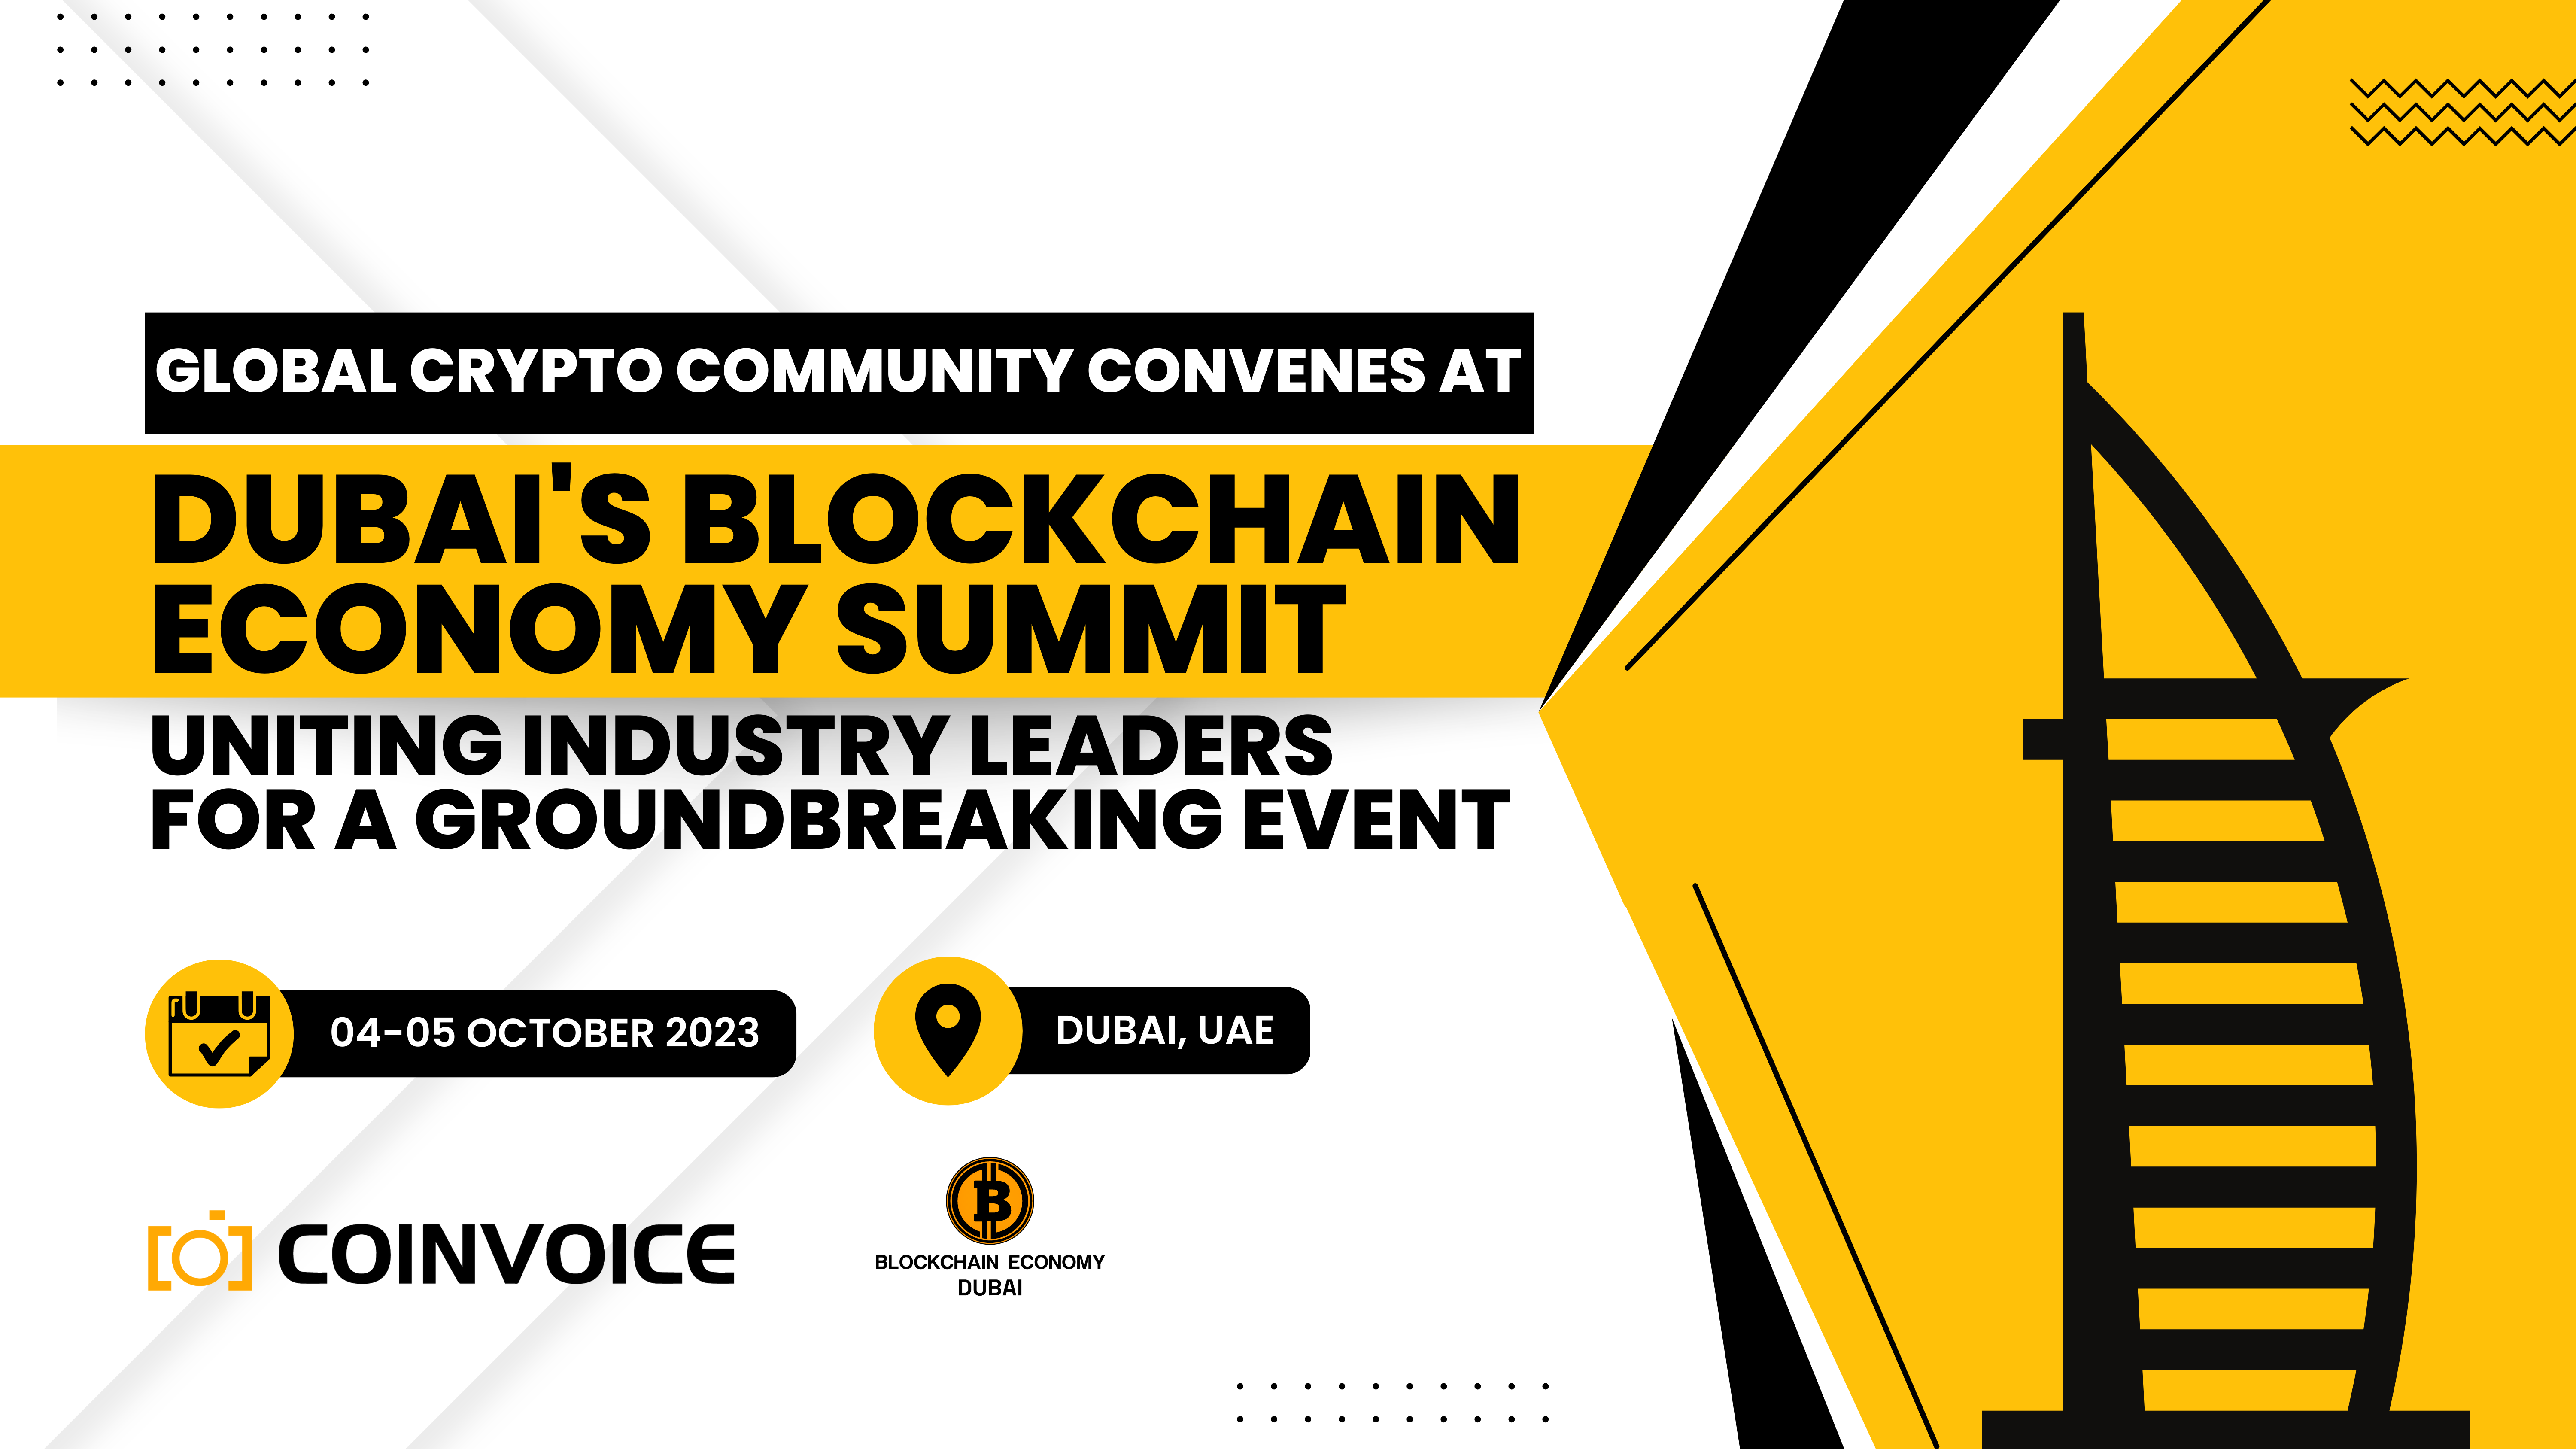 Global Crypto Community Convenes at Dubai's Blockchain Economy Summit, Uniting Industry Leaders